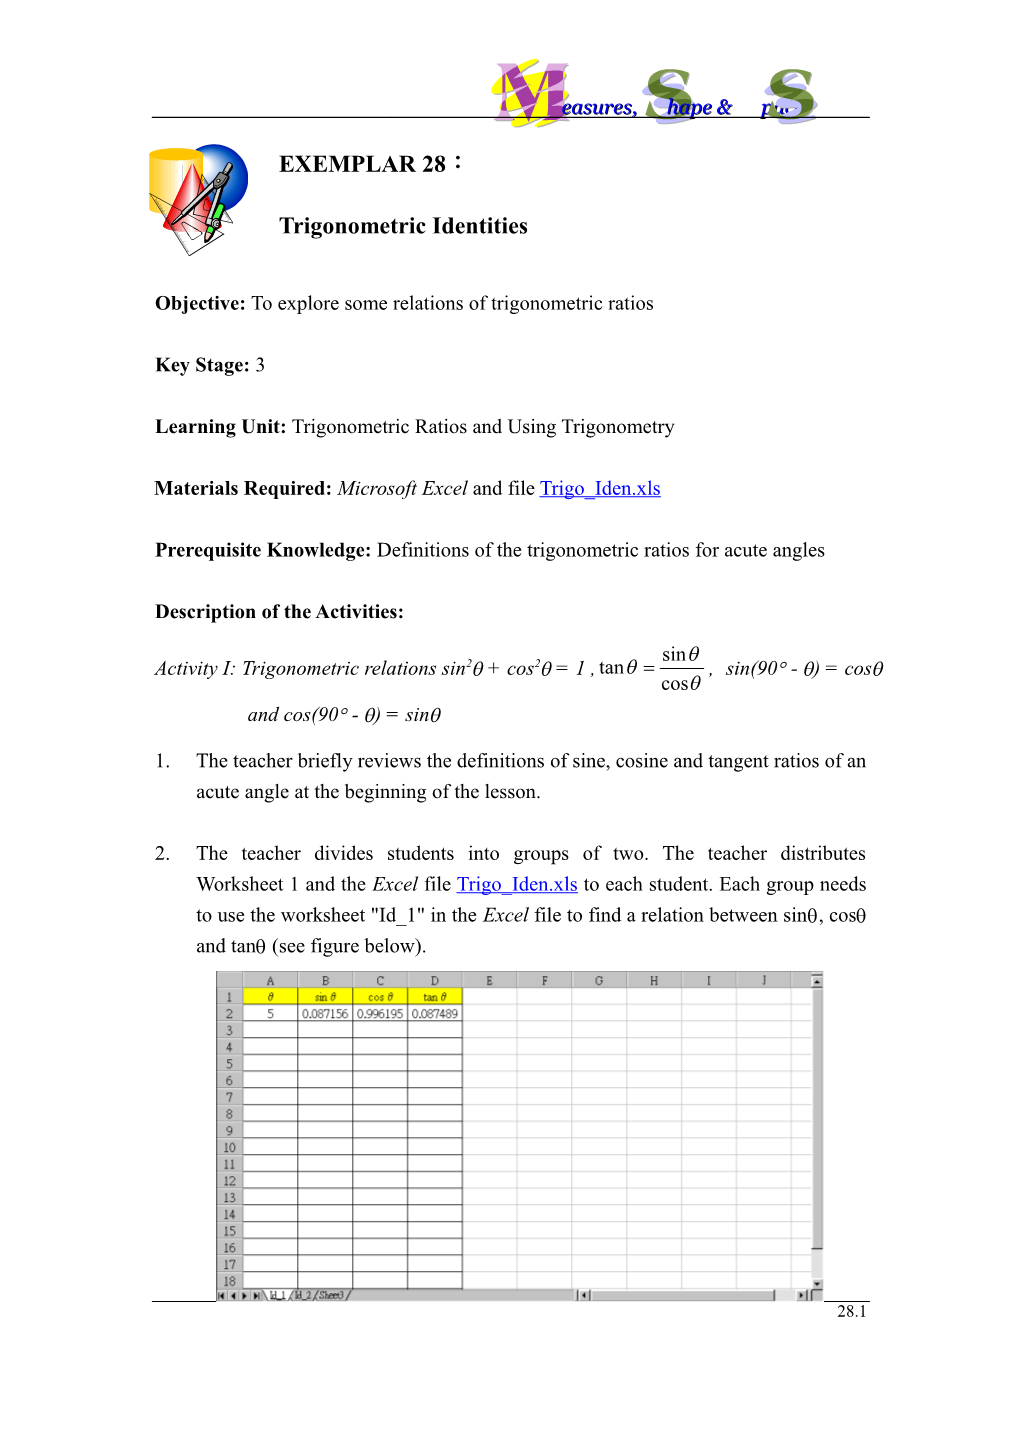 Learning Unit: Trigonometric Ratios and Using Trigonometry